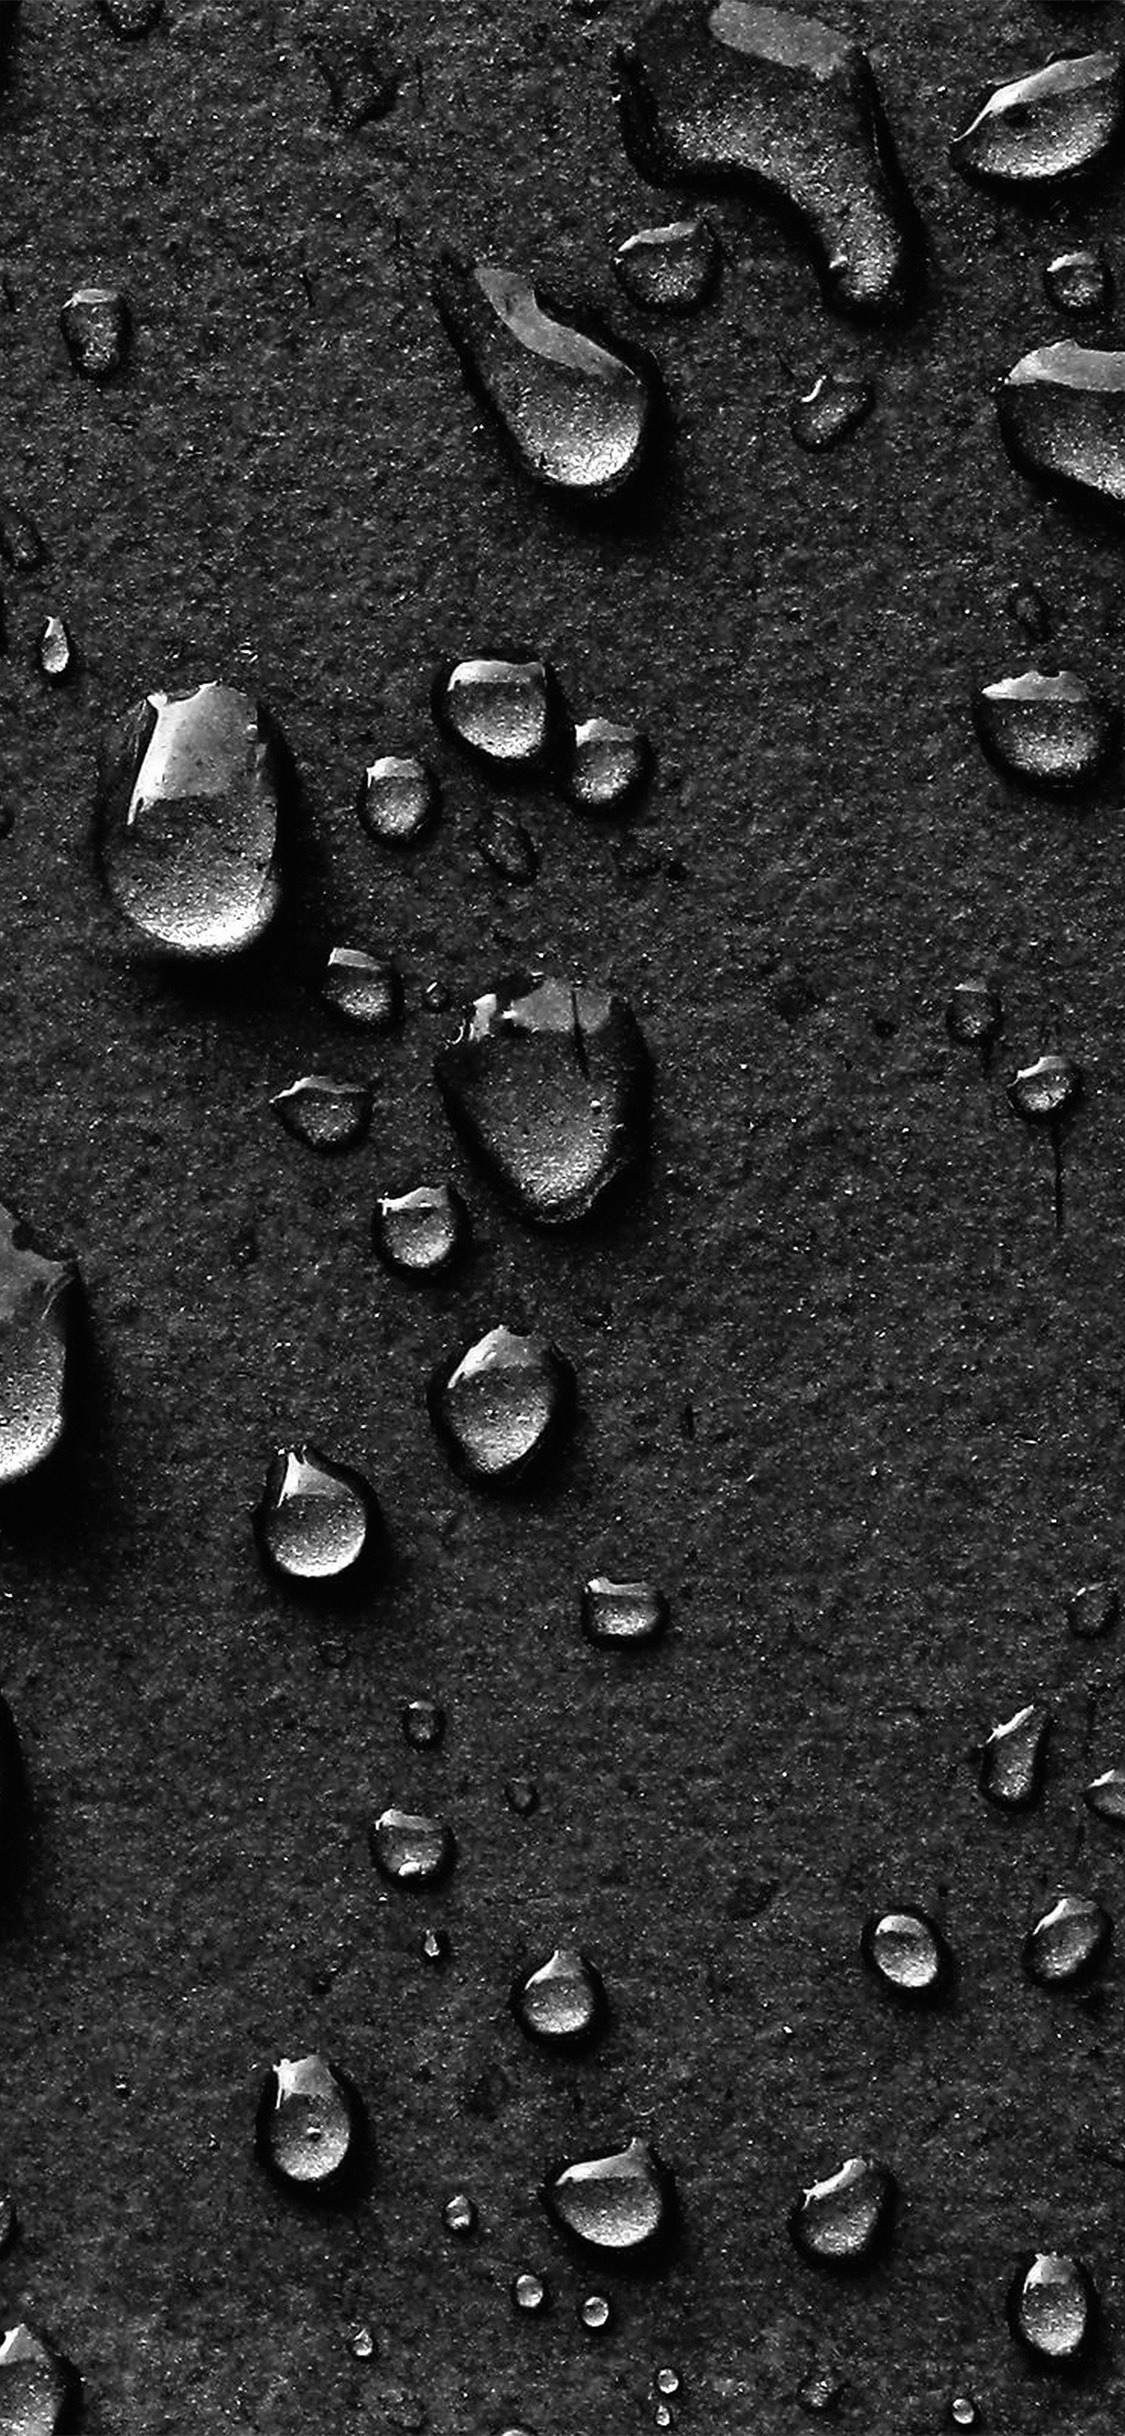 iPhone X wallpaper. drops of rain dark nature texture pattern bw